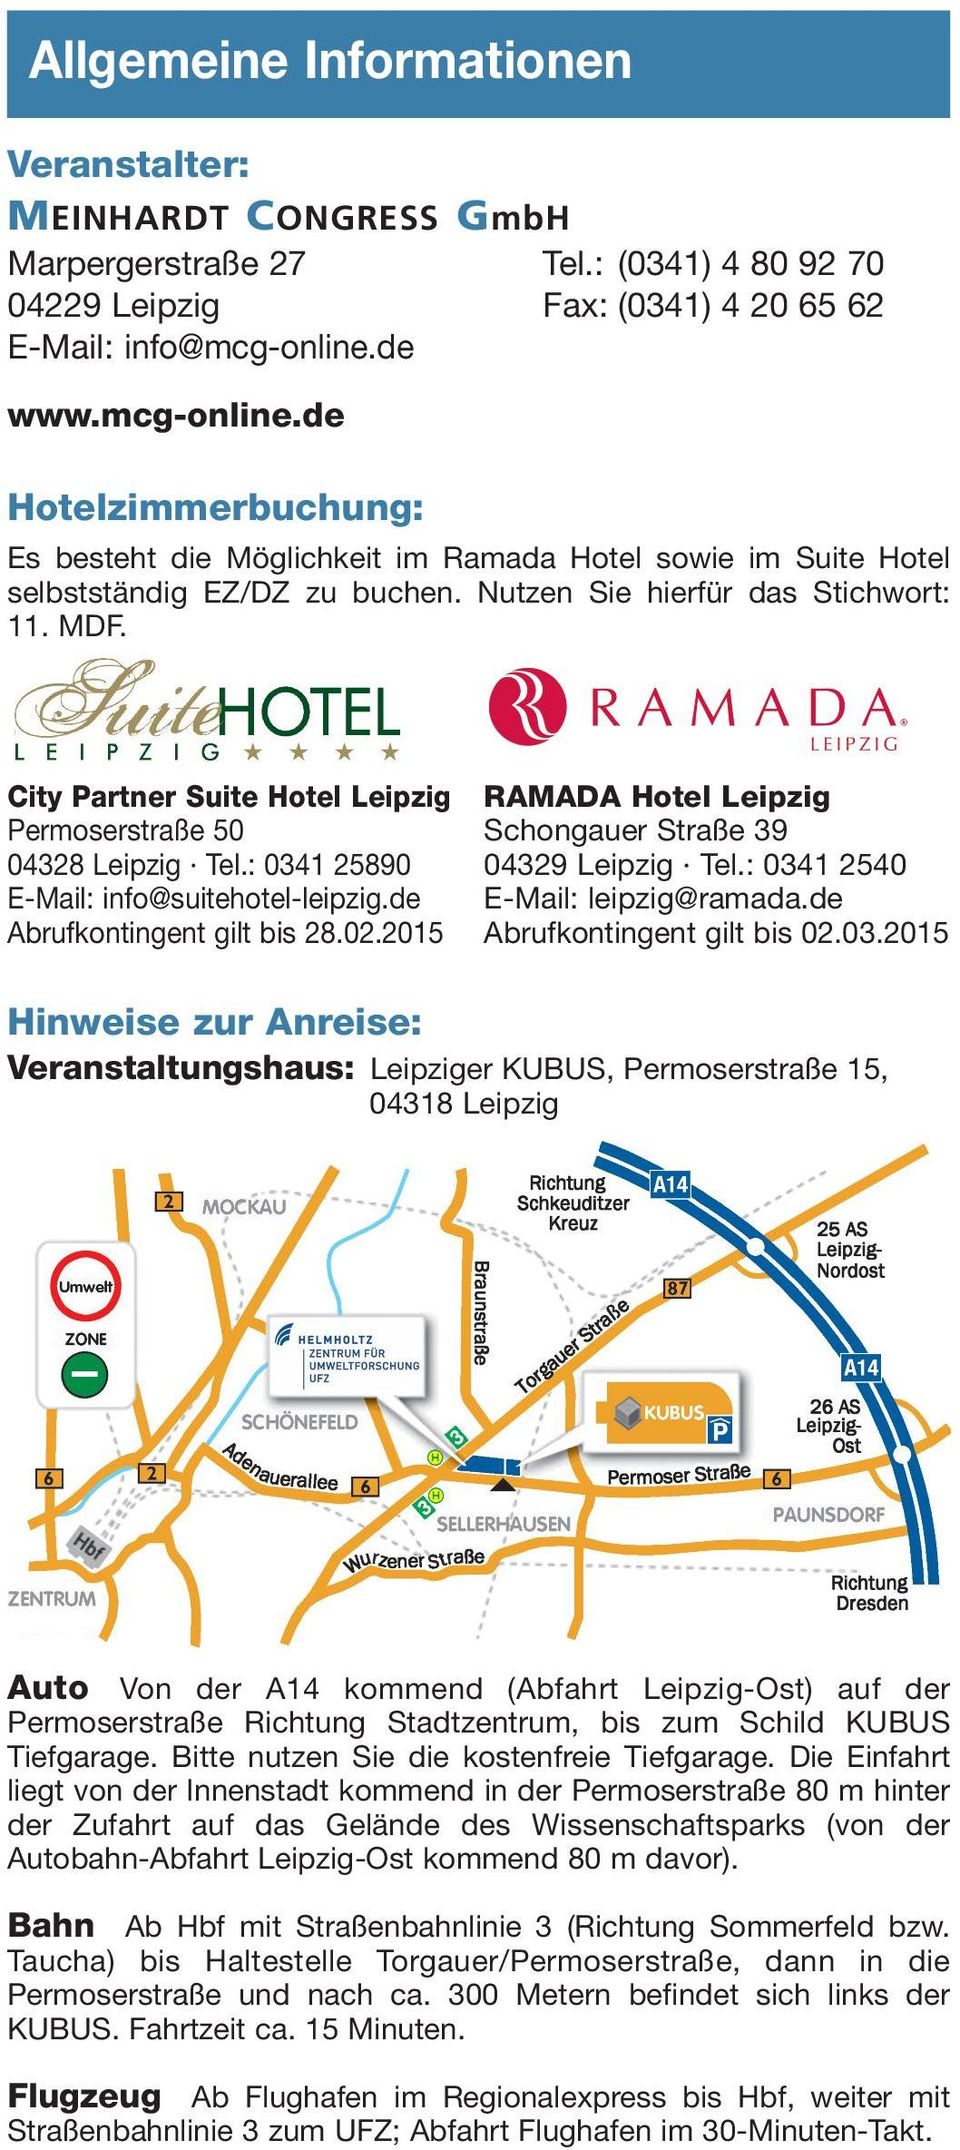 City Partner Suite Hotel Leipzig RAMADA Hotel Leipzig Permoserstraße 50 Schongauer Straße 39 04328 Leipzig Tel.: 0341 25890 04329 Leipzig Tel.: 0341 2540 E-Mail: info@suitehotel-leipzig.